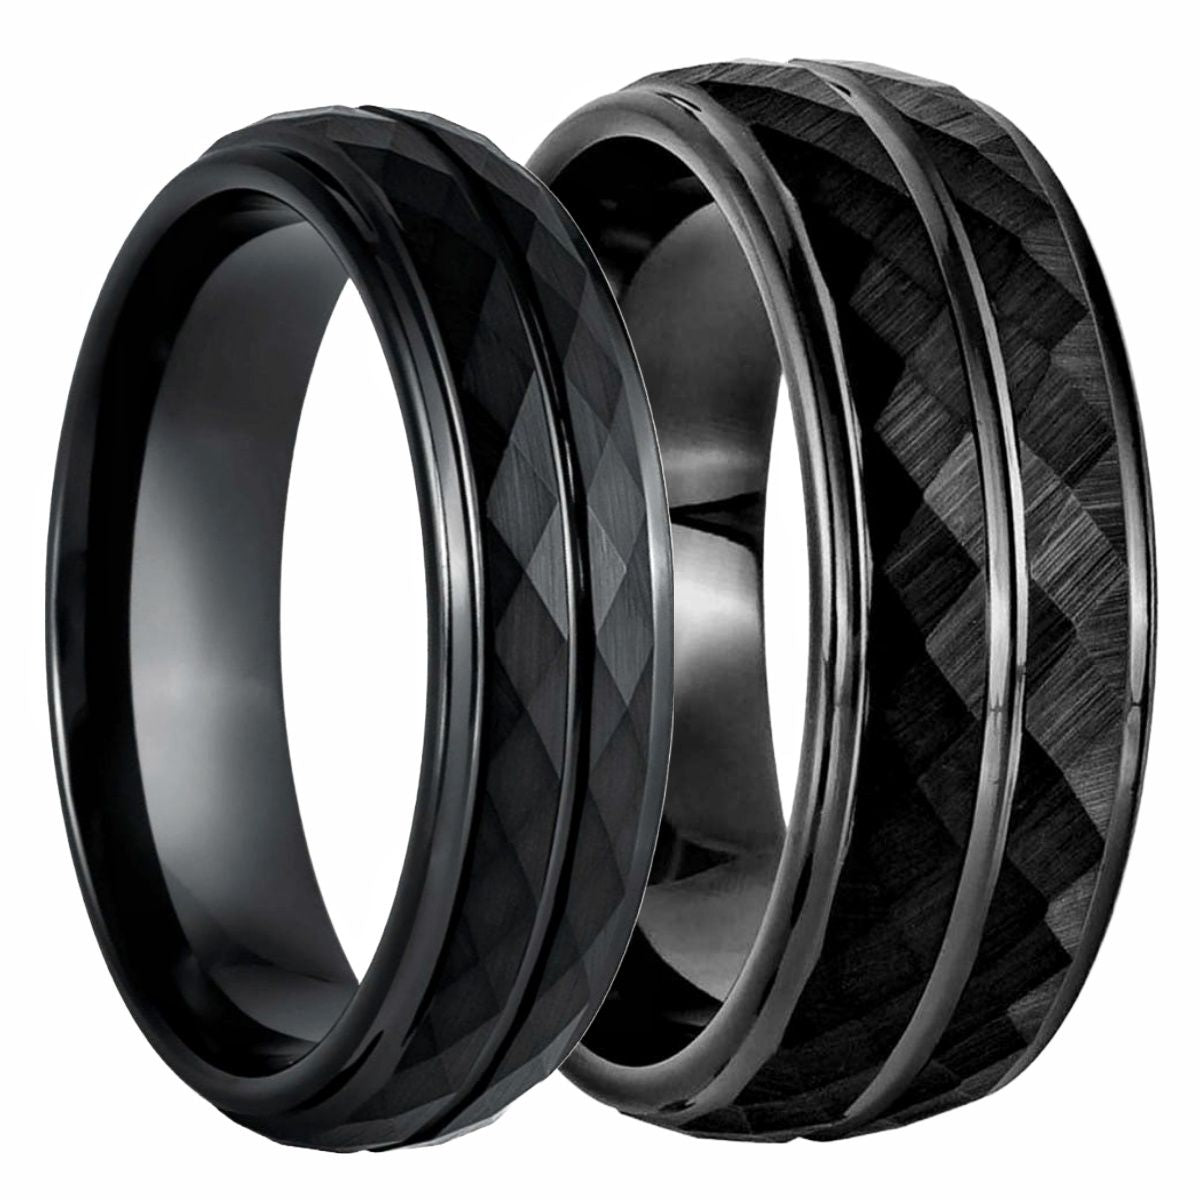 Sabrina Silver 2-Ring Set 6 & 8mm Black Tungsten Diamond Wedding Ring Him &  Her Two-tone Beveled Comfort fit, sizes 5-13